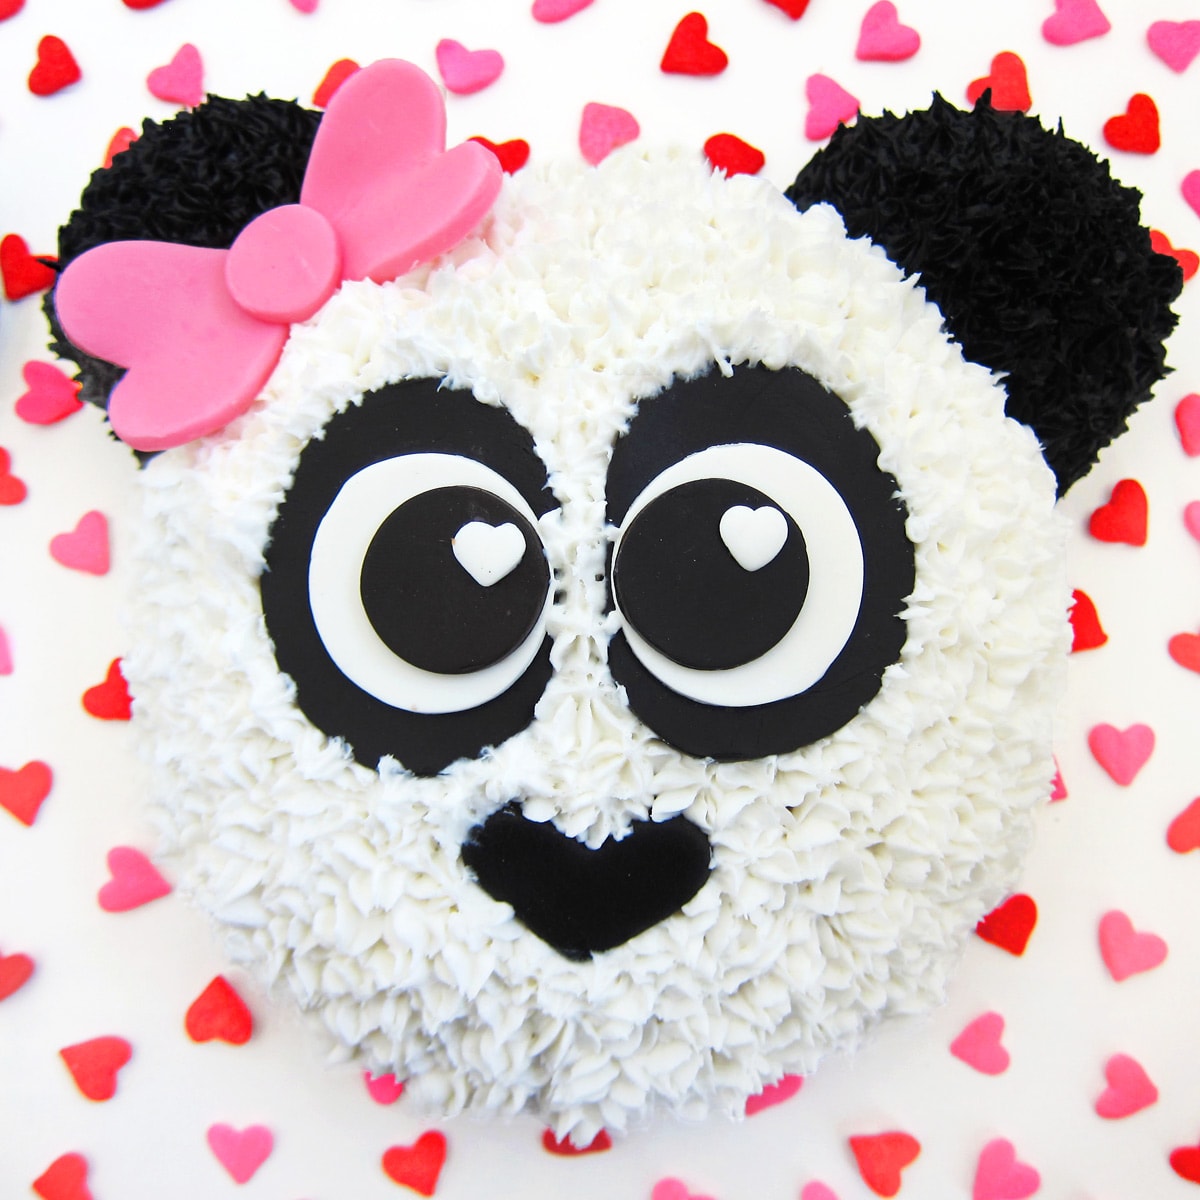 its_kateestelle - A simple but cute panda cake design as... | Facebook